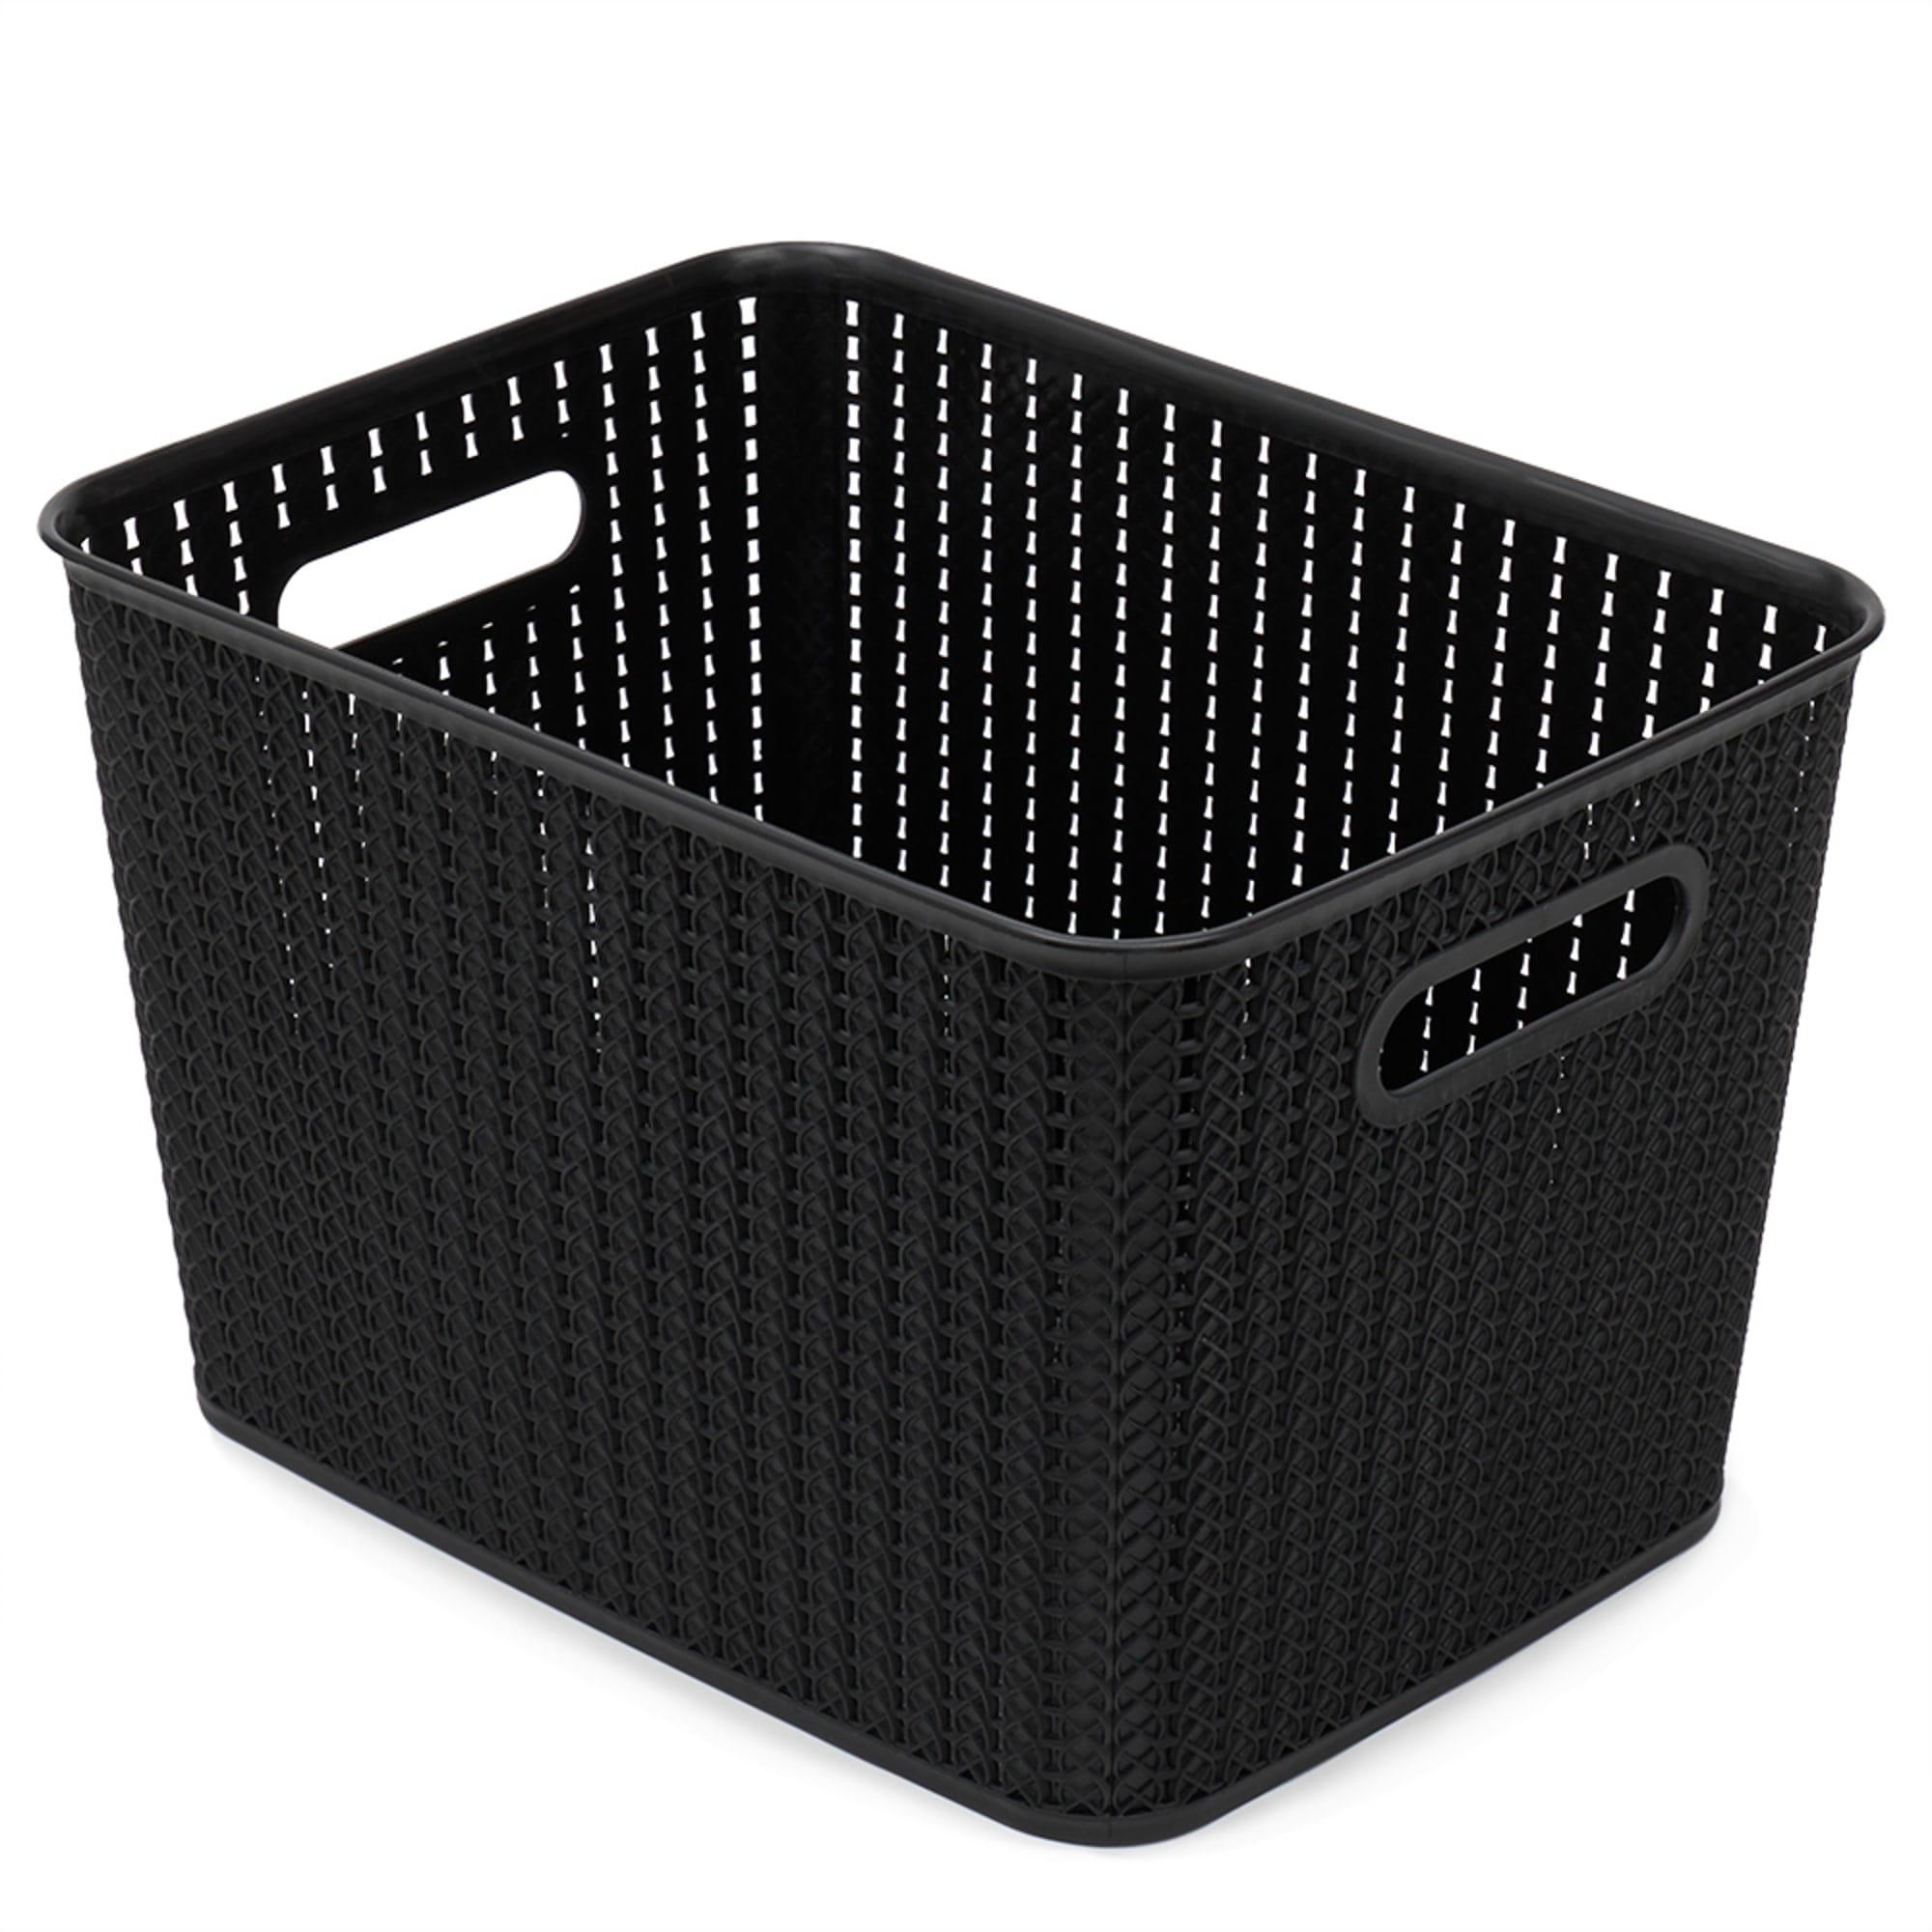 Home Basics 20 Liter Plastic Basket With Handles, Black $6 EACH, CASE PACK OF 4